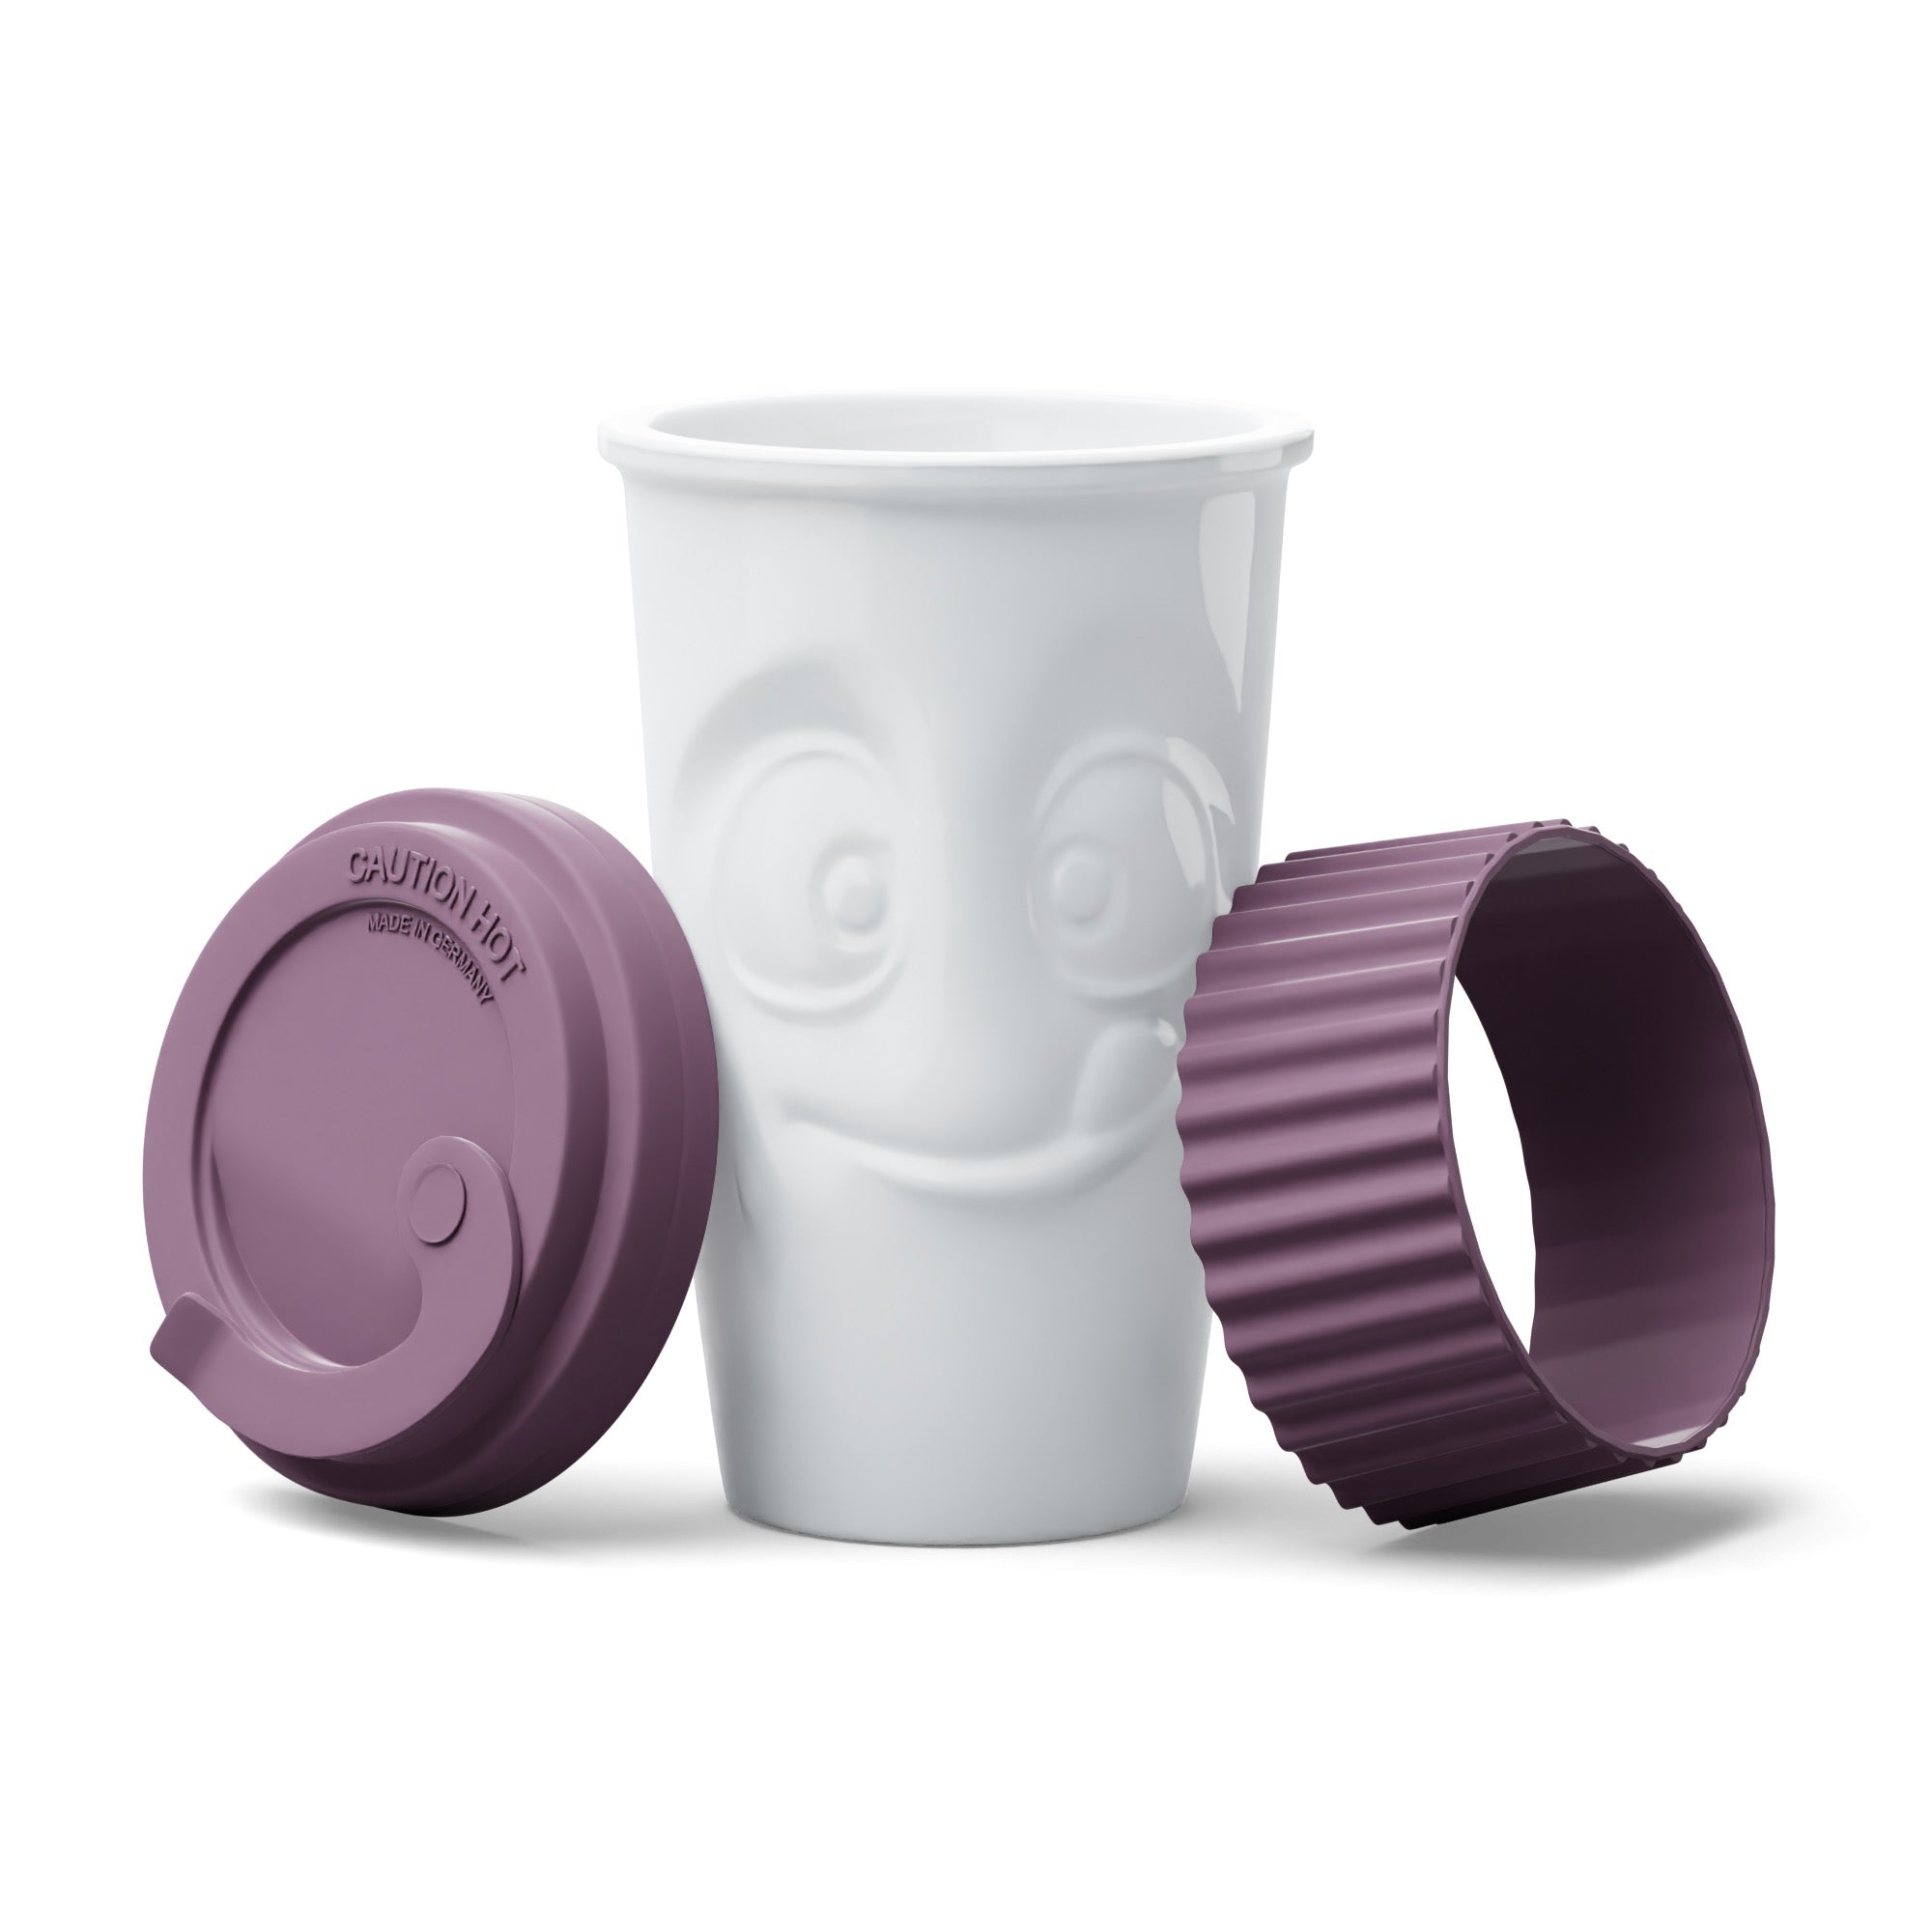 Mug To Go Tasty – Wineberry Color (No Handle, Protective Sleeve